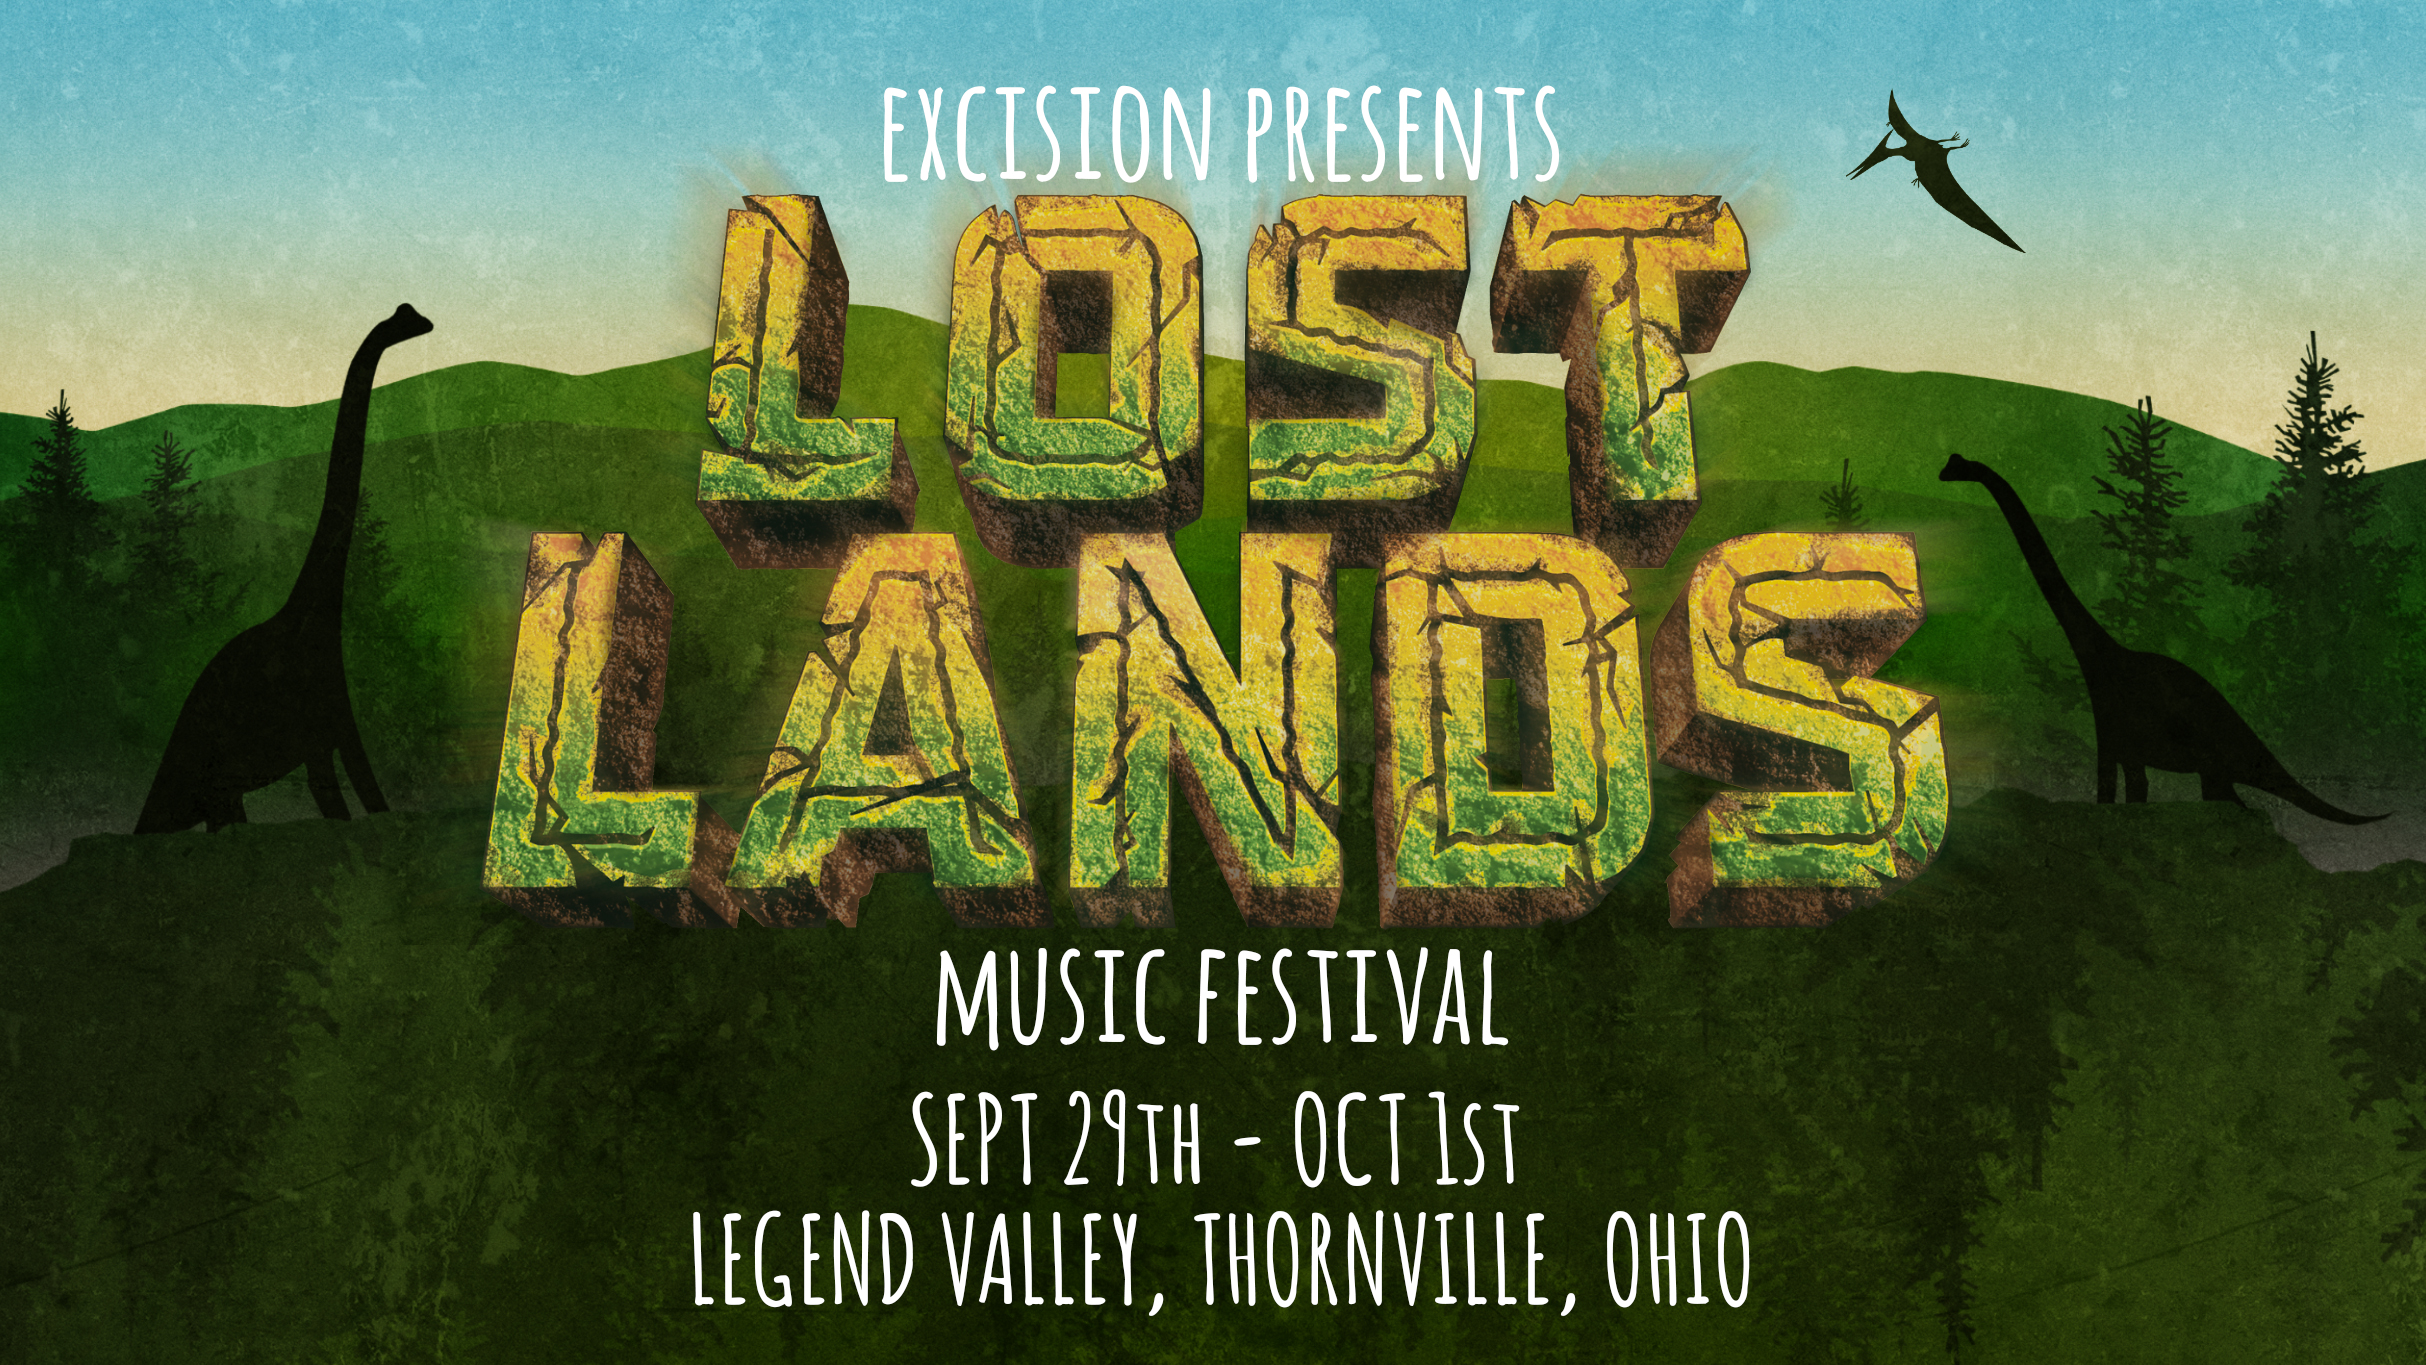 Lost Lands Music Festival 2017